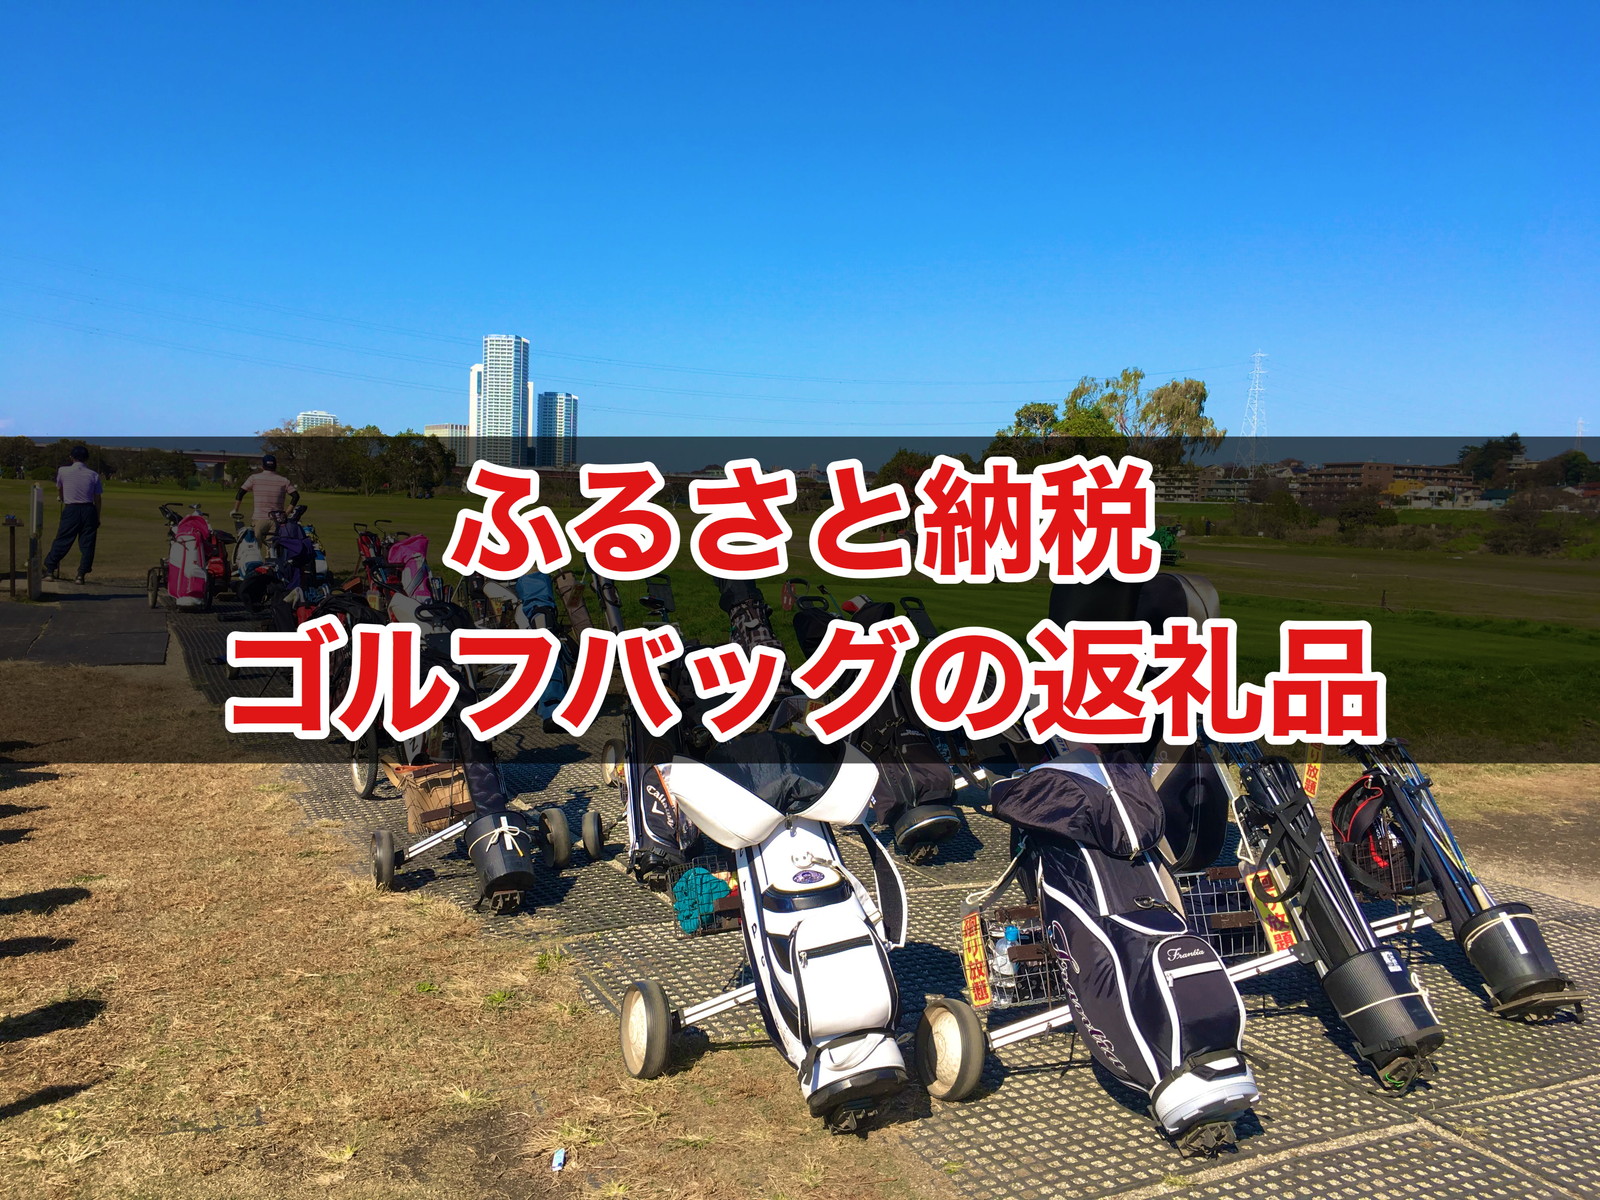 SALE さとふるふるさと納税 京都市 ルーツストーリー キャディバッグ グリーン ホワイト ゴルフクラブ